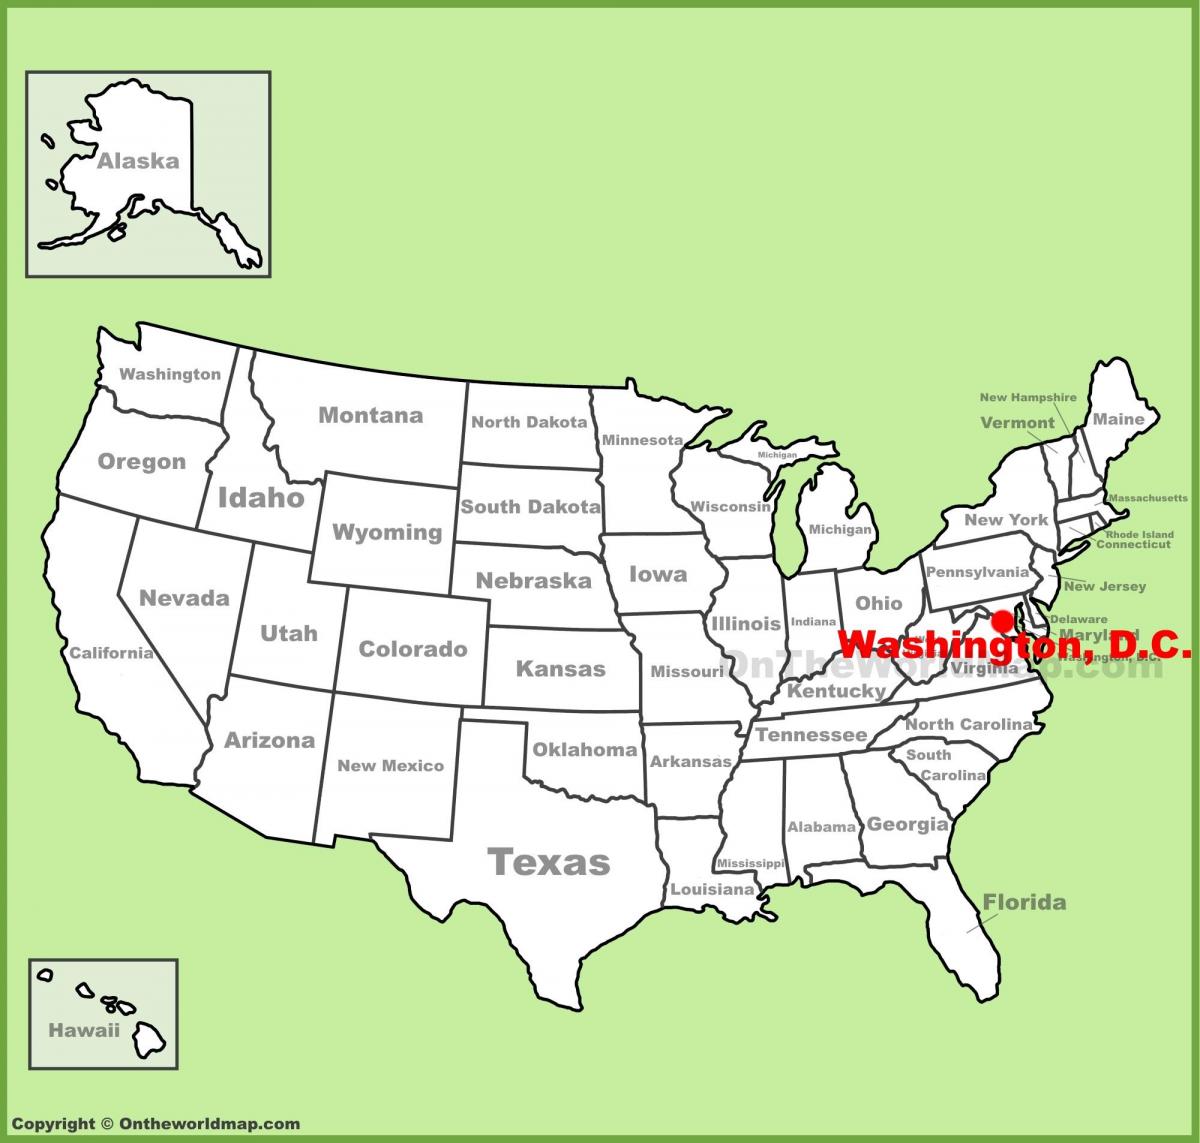 washington dc na mapi amerike